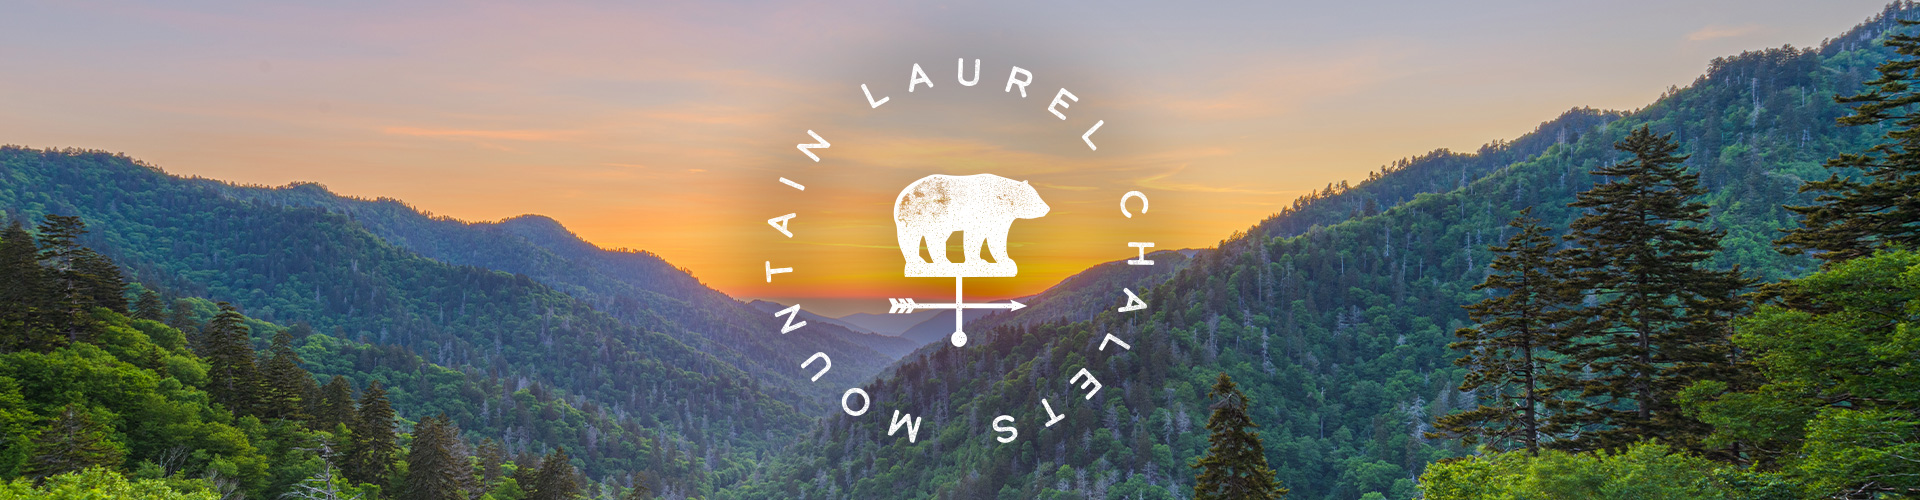 Mountain Laurel Chalets Banner